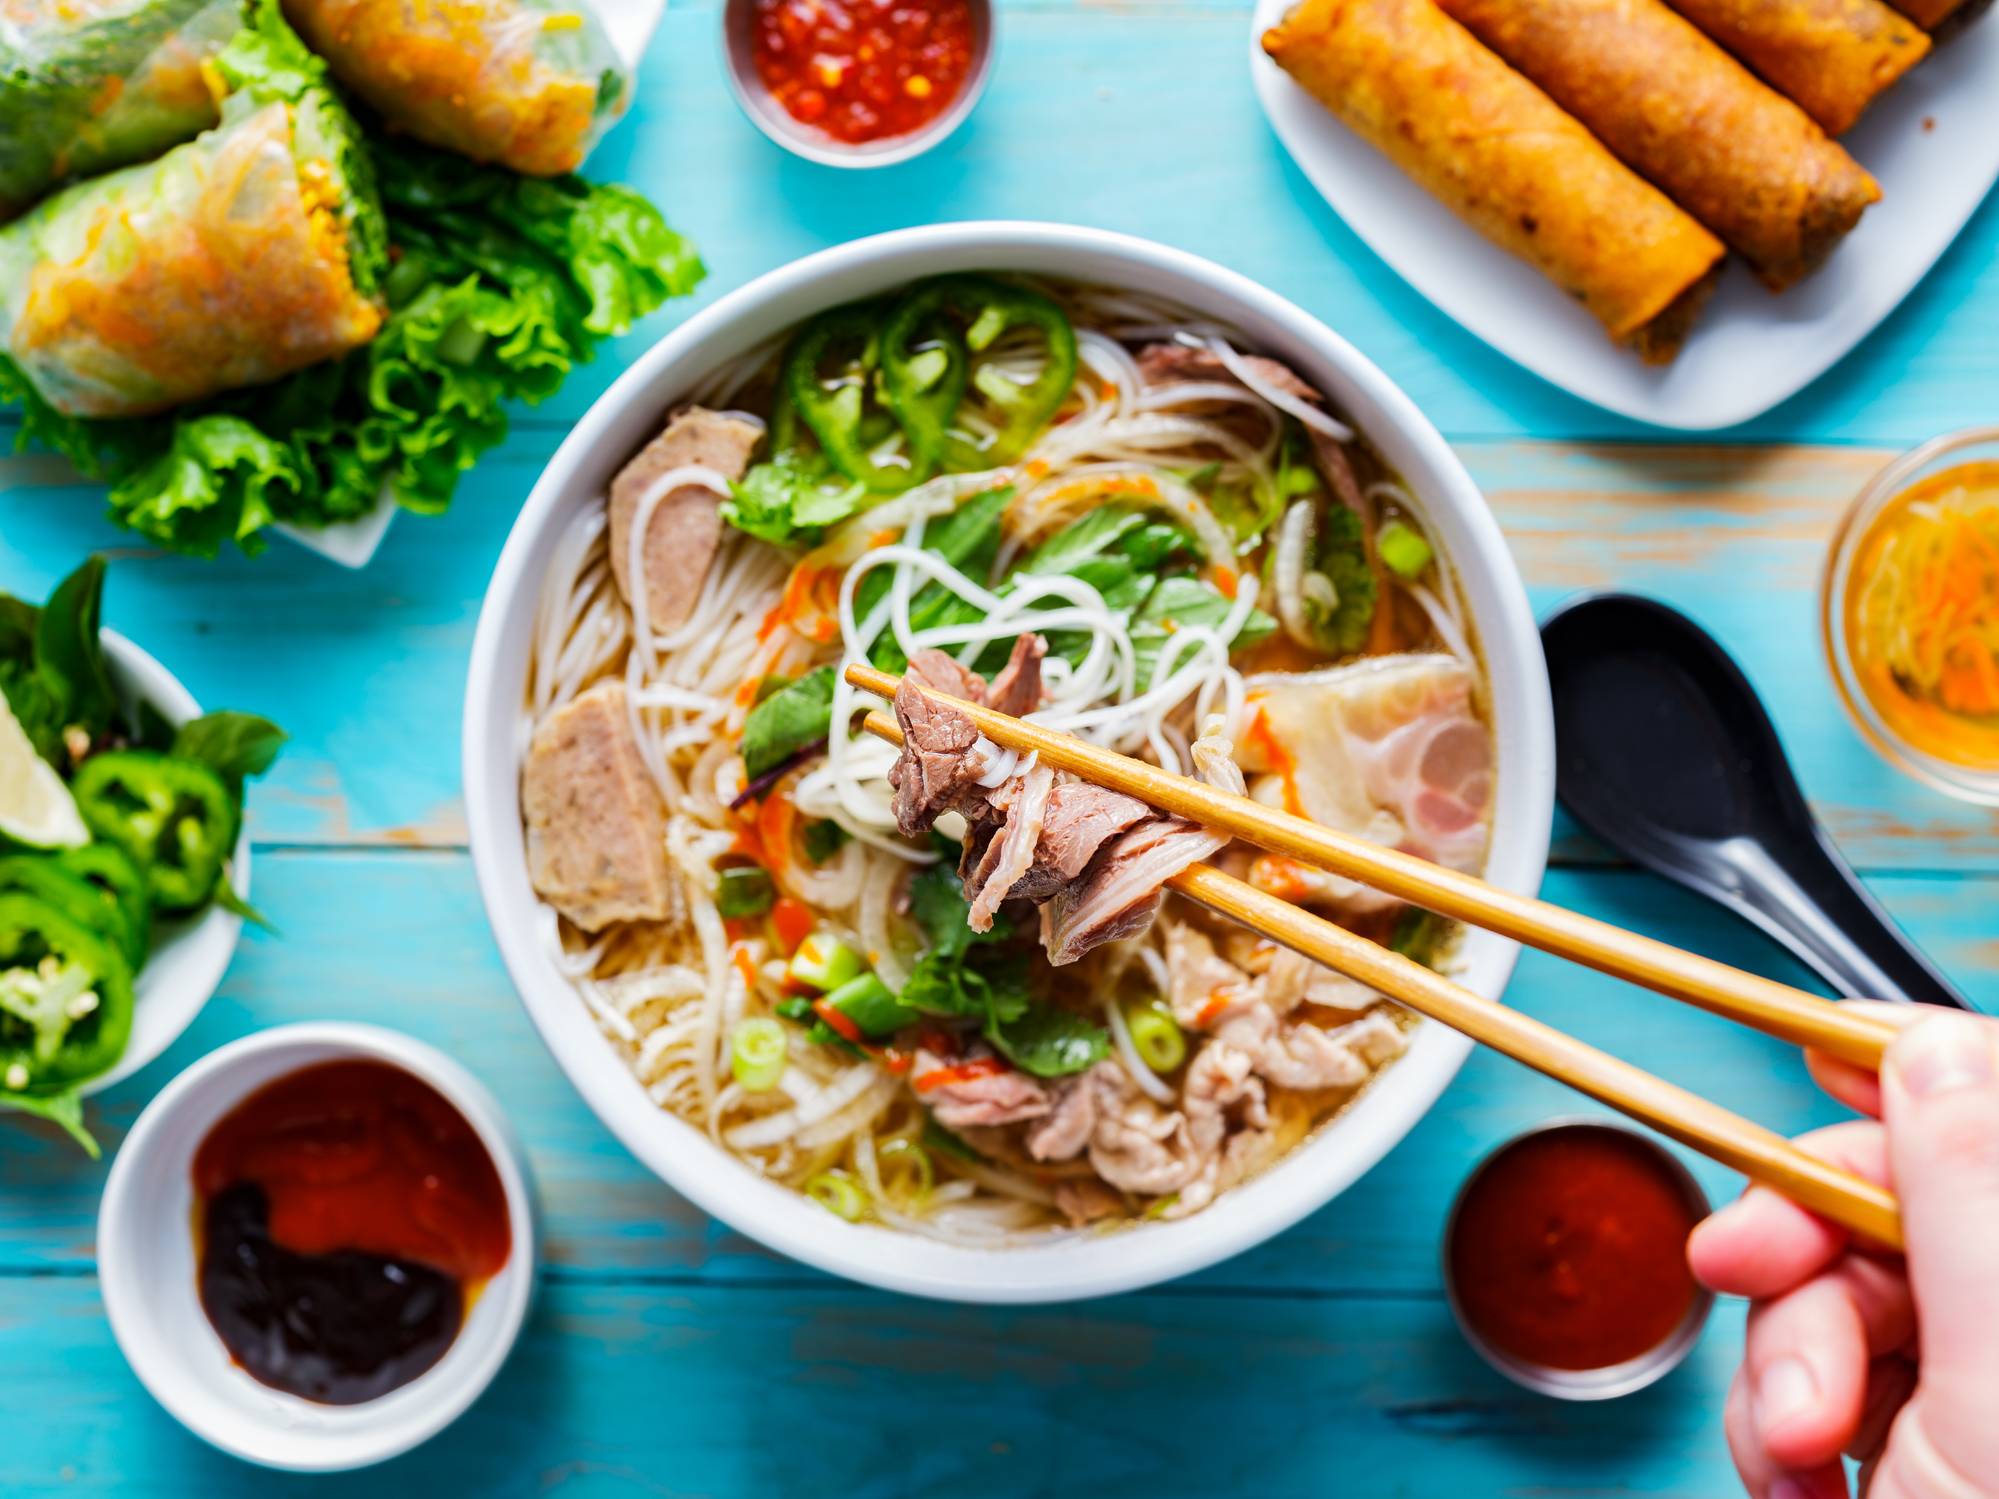 Satisfy Your Cravings at the Best Katy Vietnamese Restaurant